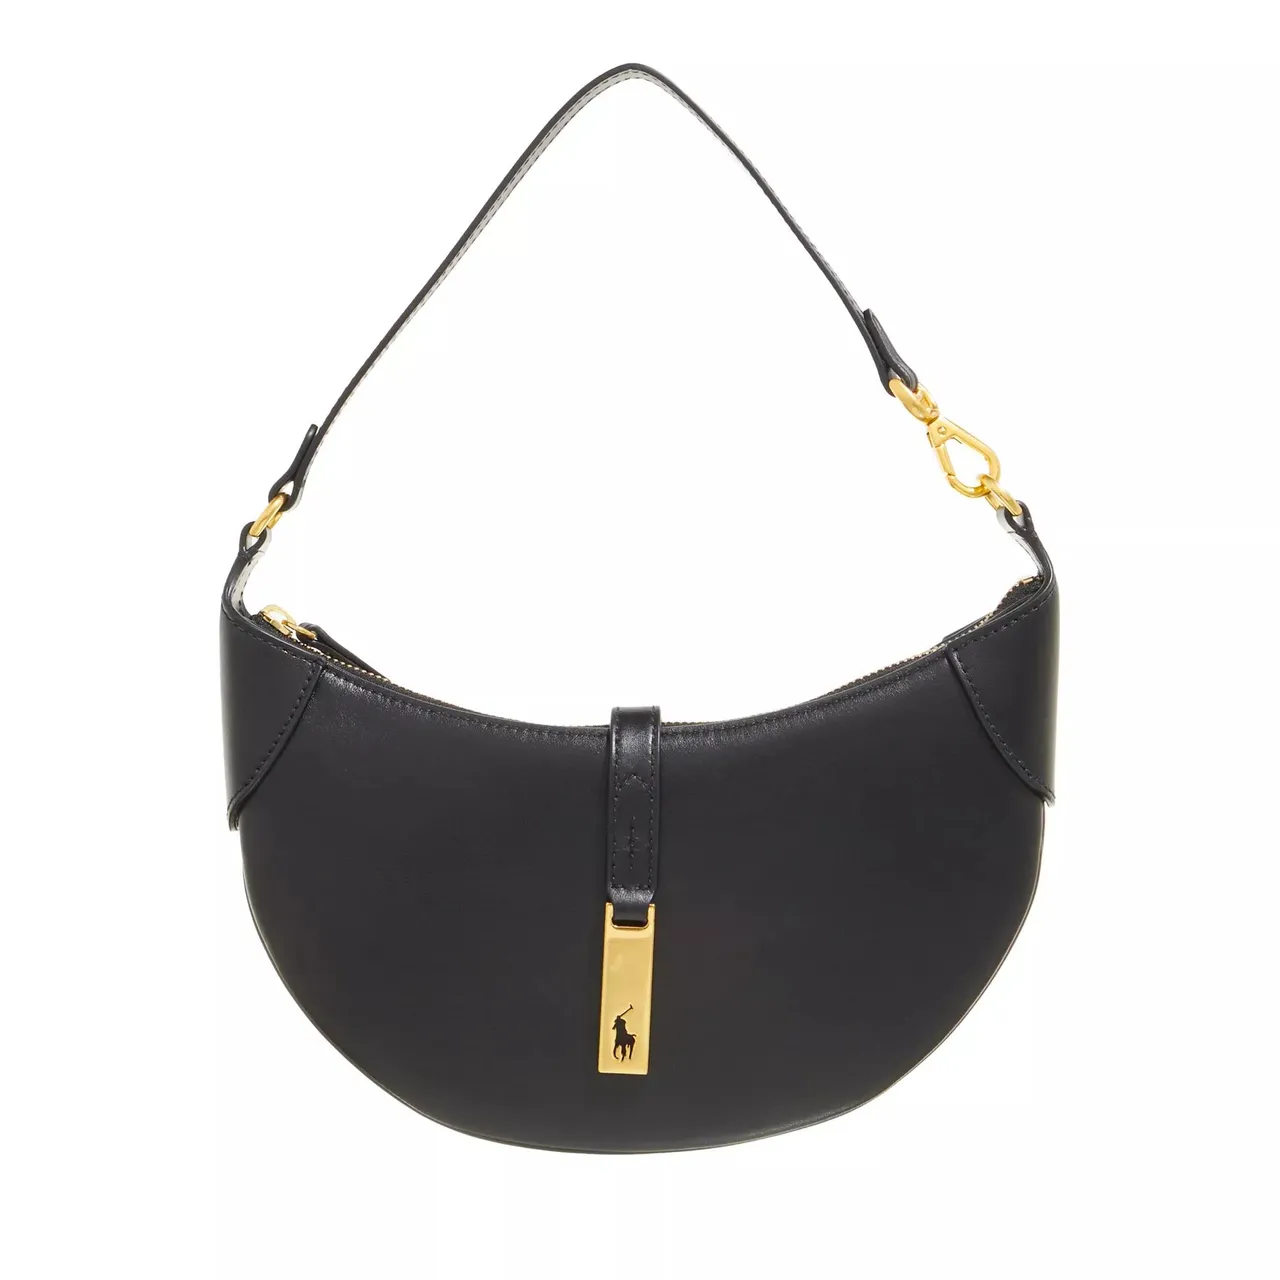 Polo Ralph Lauren Hobo Bags - Shoulder Bag Small - black - Hobo Bags for ladies